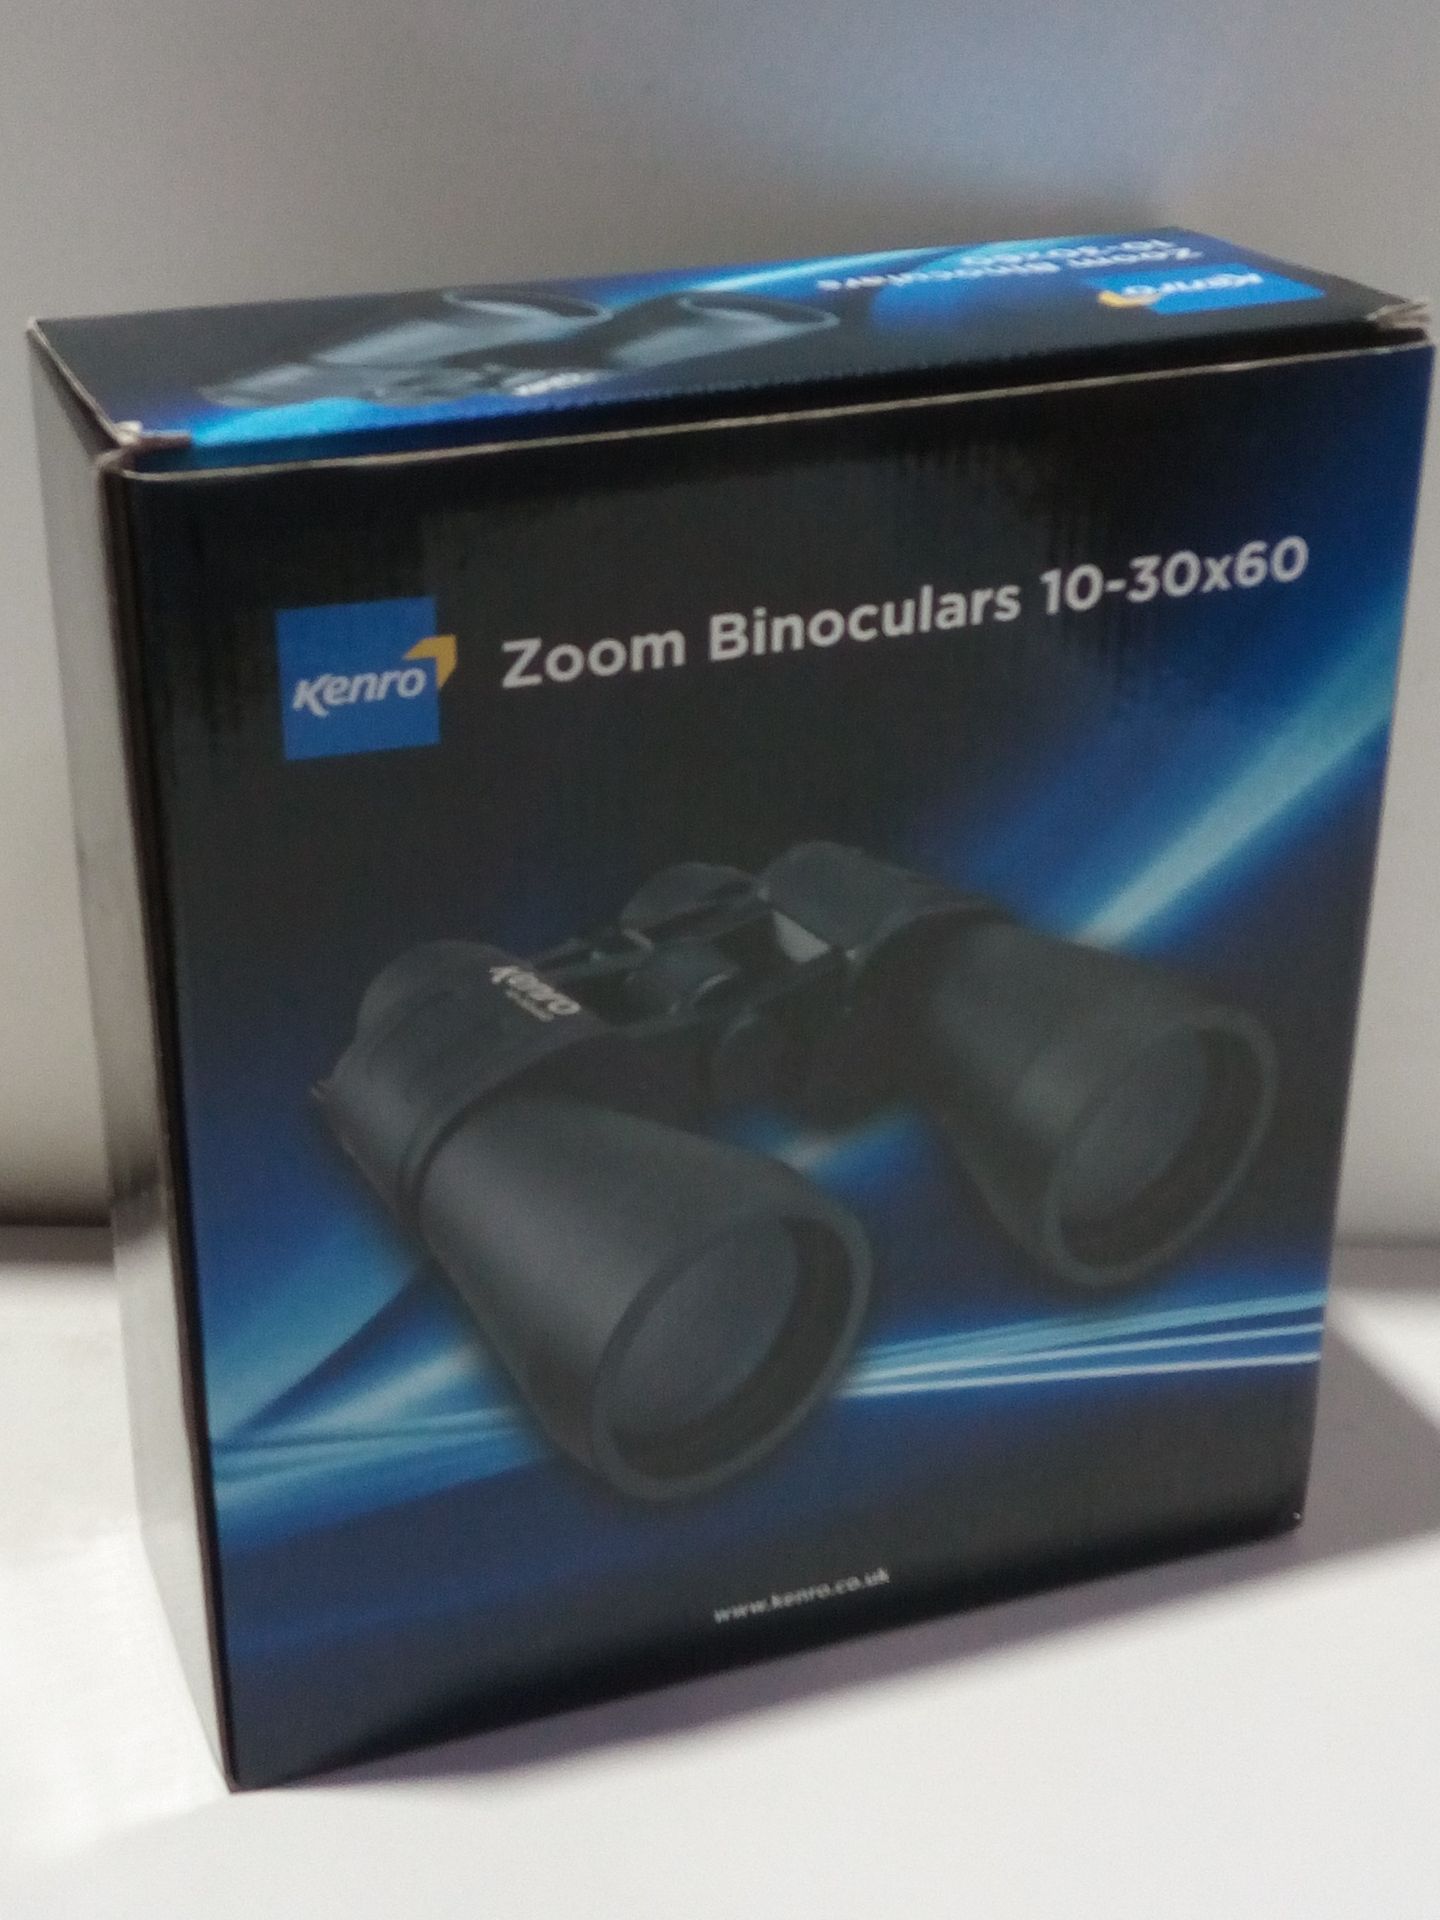 RRP £55.99 Kenro Zoom Binoculars 10-30x60 High Performance 60mm - Image 2 of 2